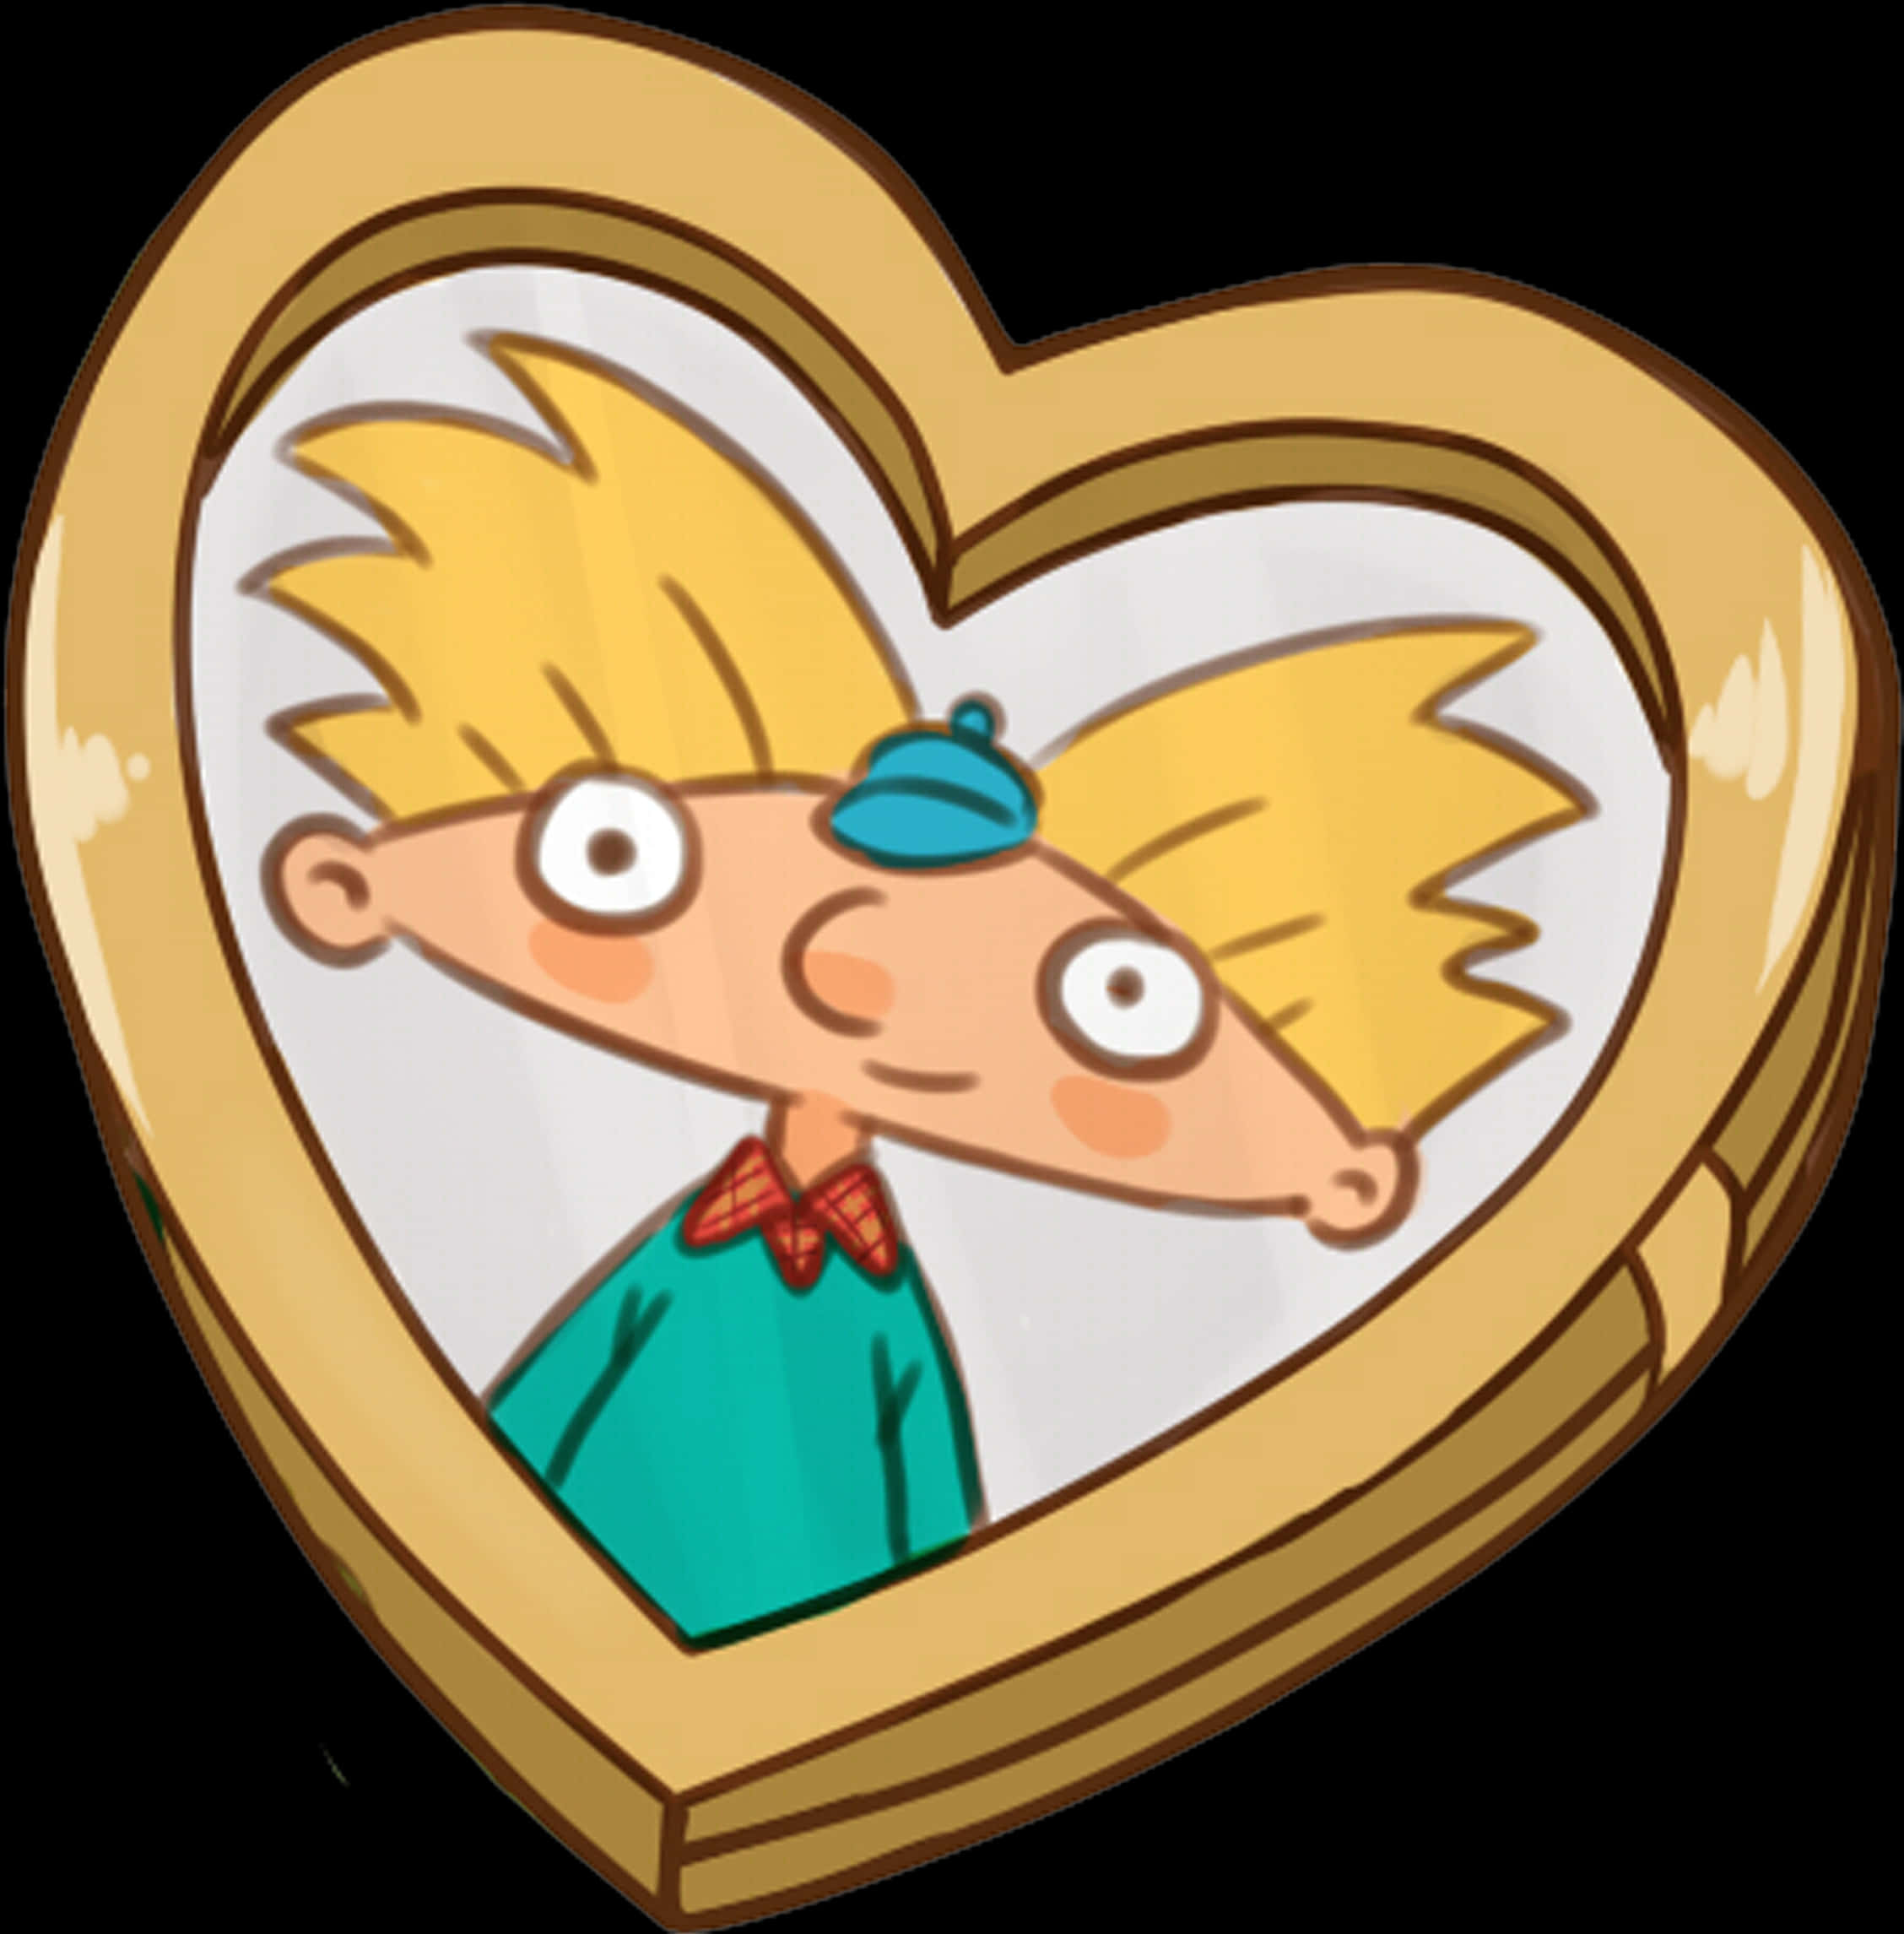 A Cartoon Of A Boy In A Heart Shaped Mirror